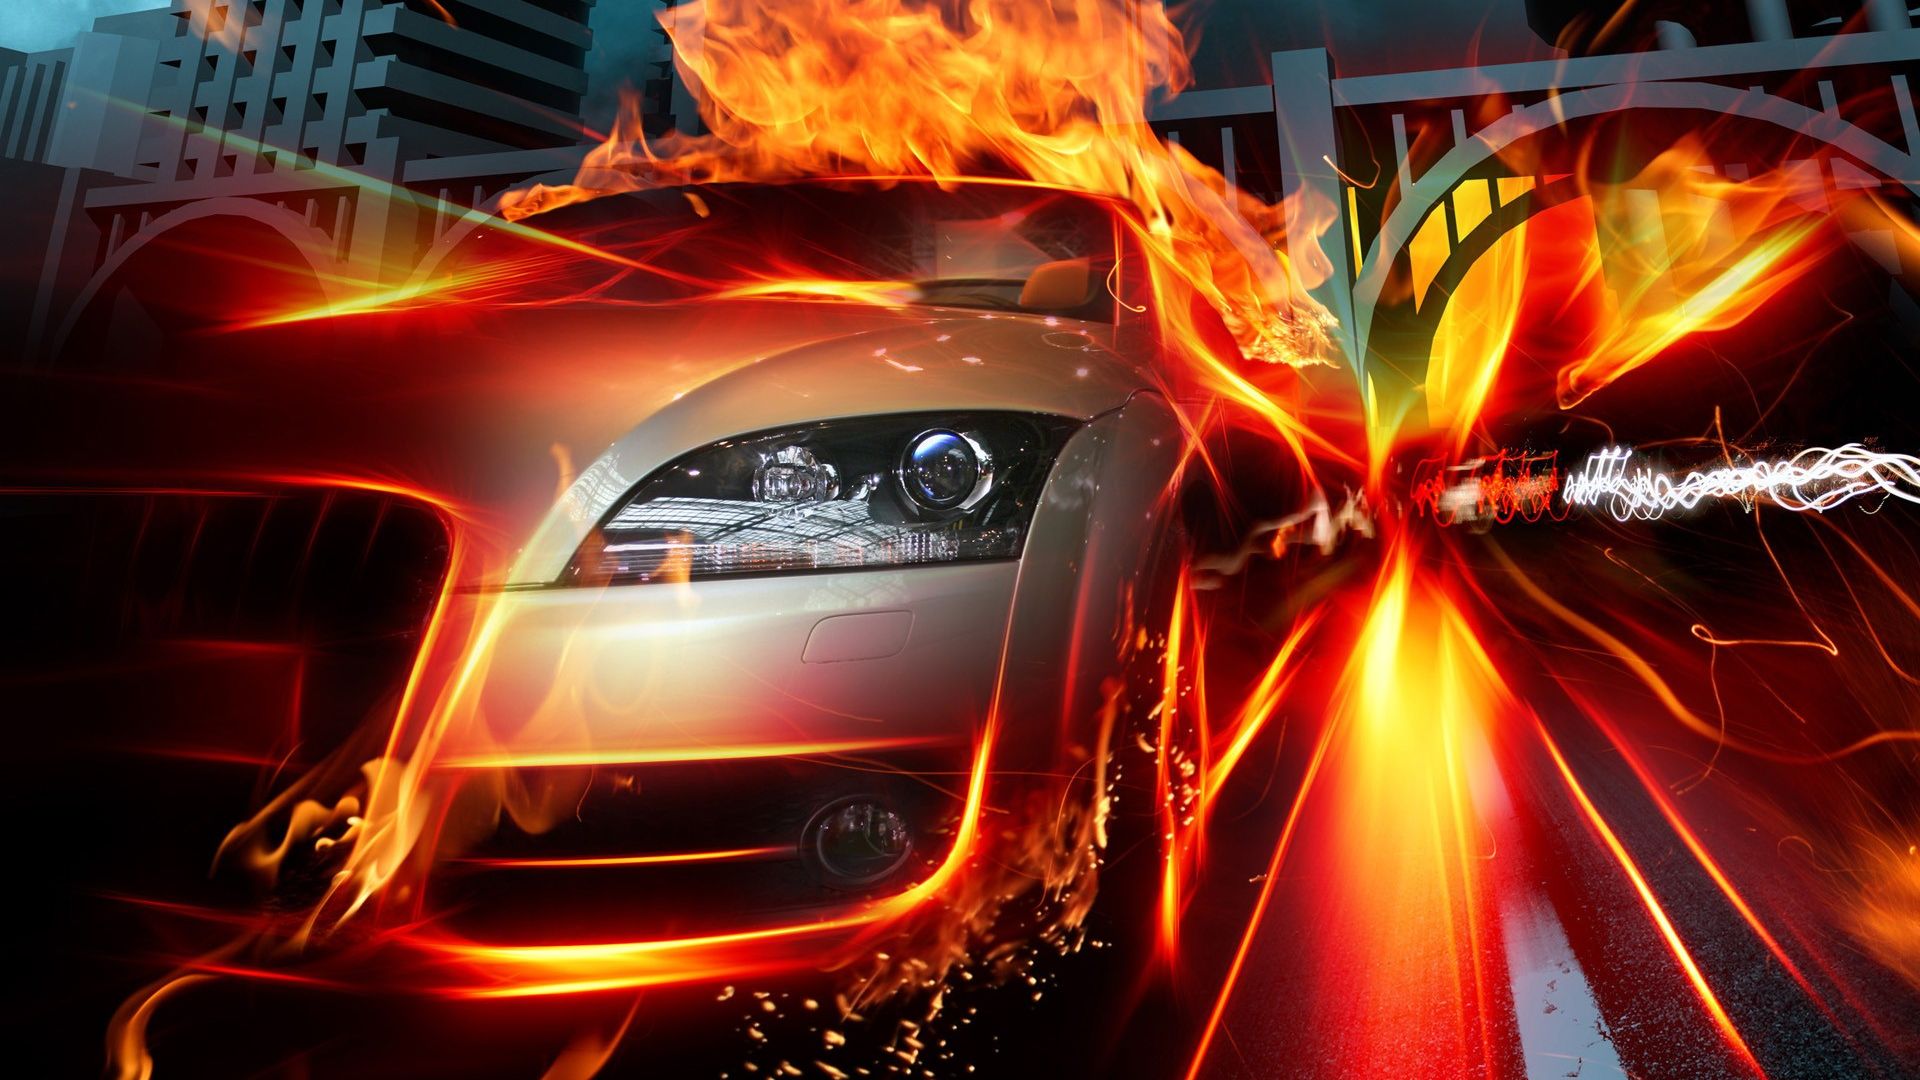 Desktop Wallpaper Race Car On Fire, Hd Image, Picture, Background, J2qwua